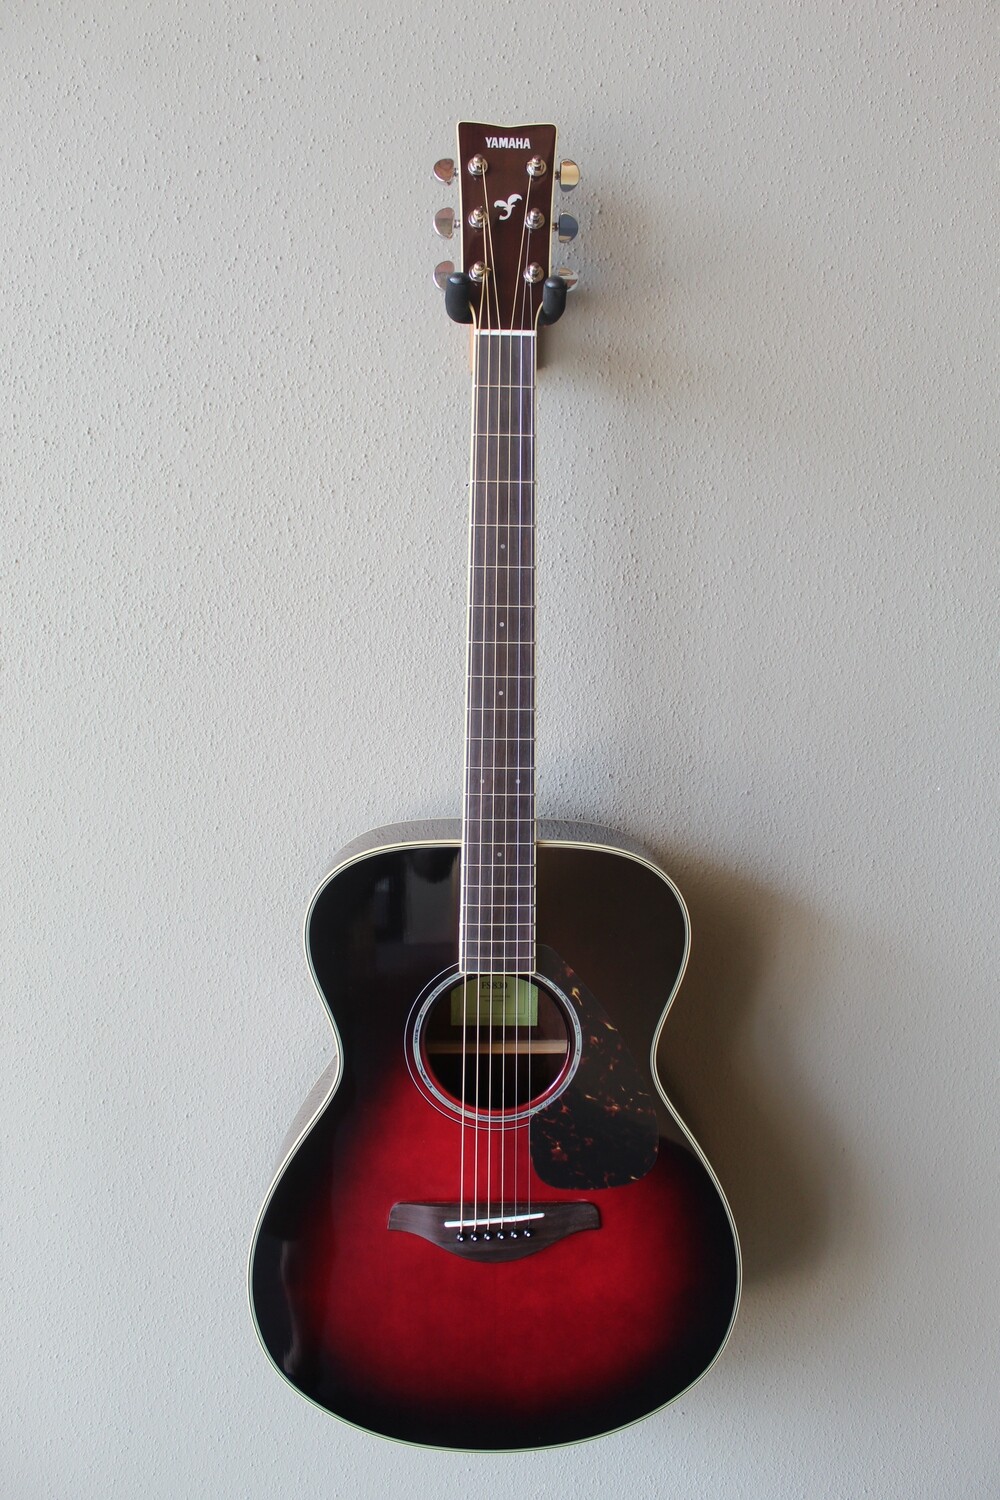 Yamaha FS830 Concert Steel String Acoustic Guitar with Gig Bag - Dusk Sun Red